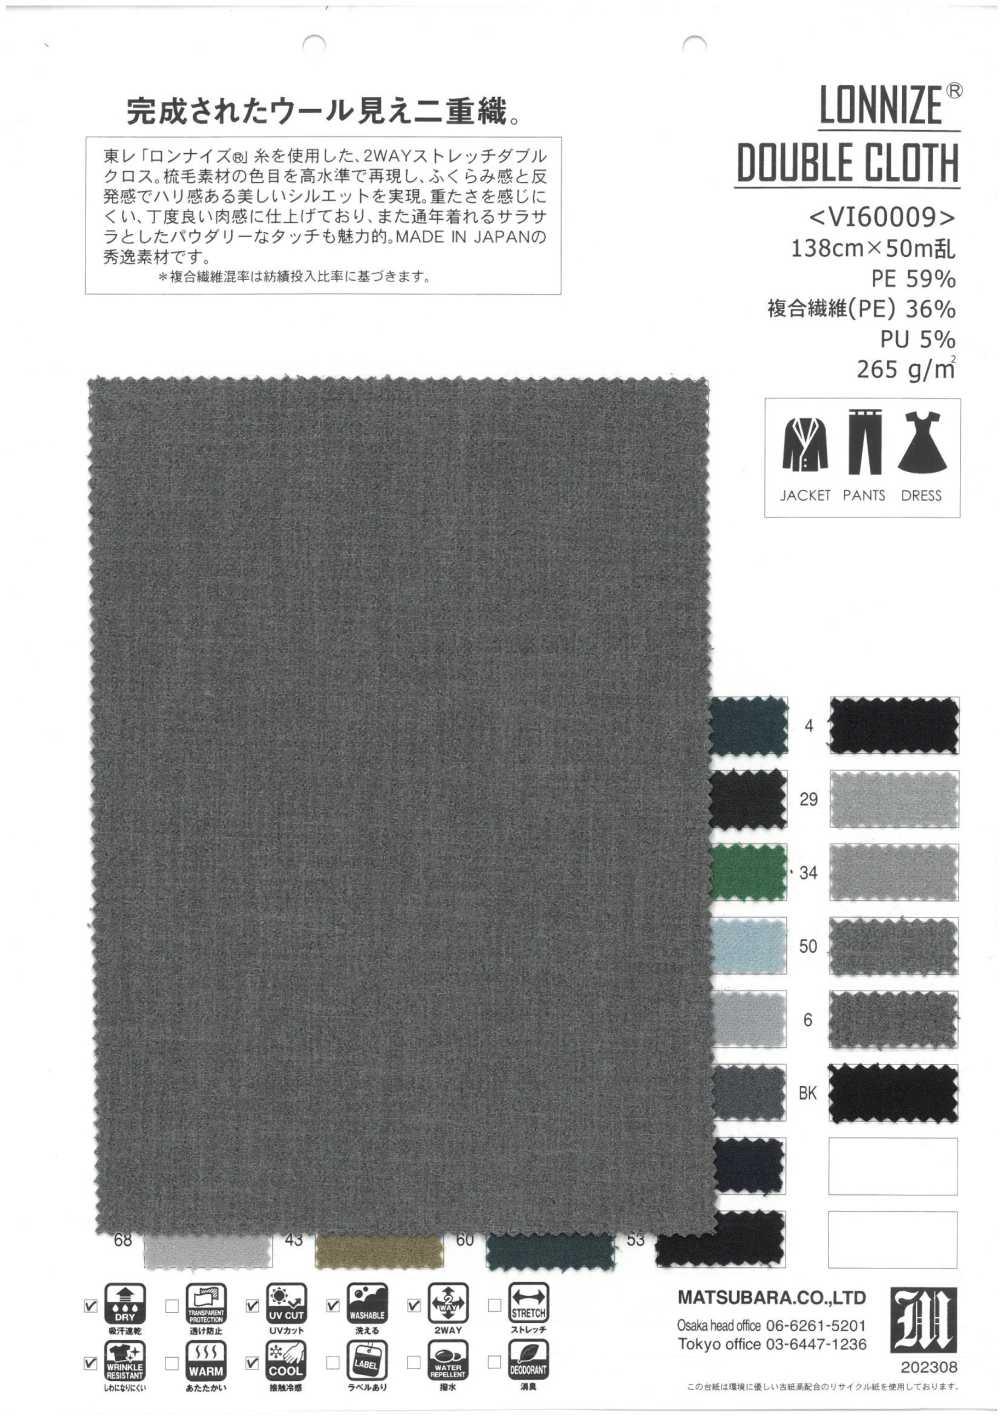 VI60009 LONNIZE® DOUBLE CLOTH[원단] 마쯔바라(MATSUBARA)